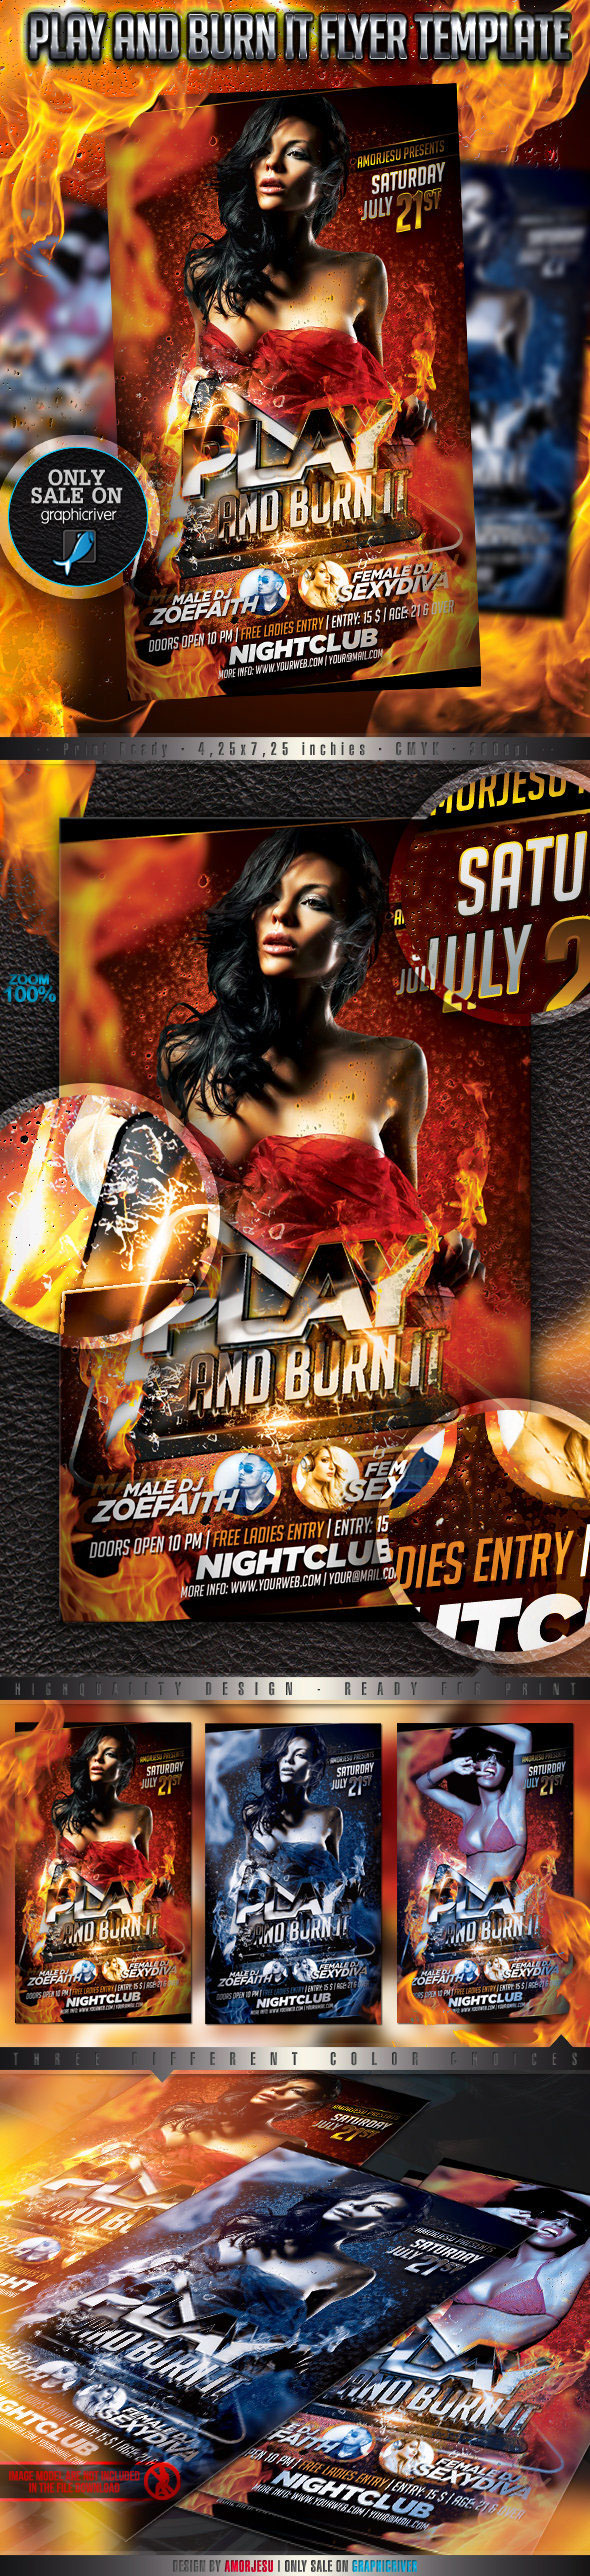 flyer template brochure psd dj Invitation party nightclub Event midnight